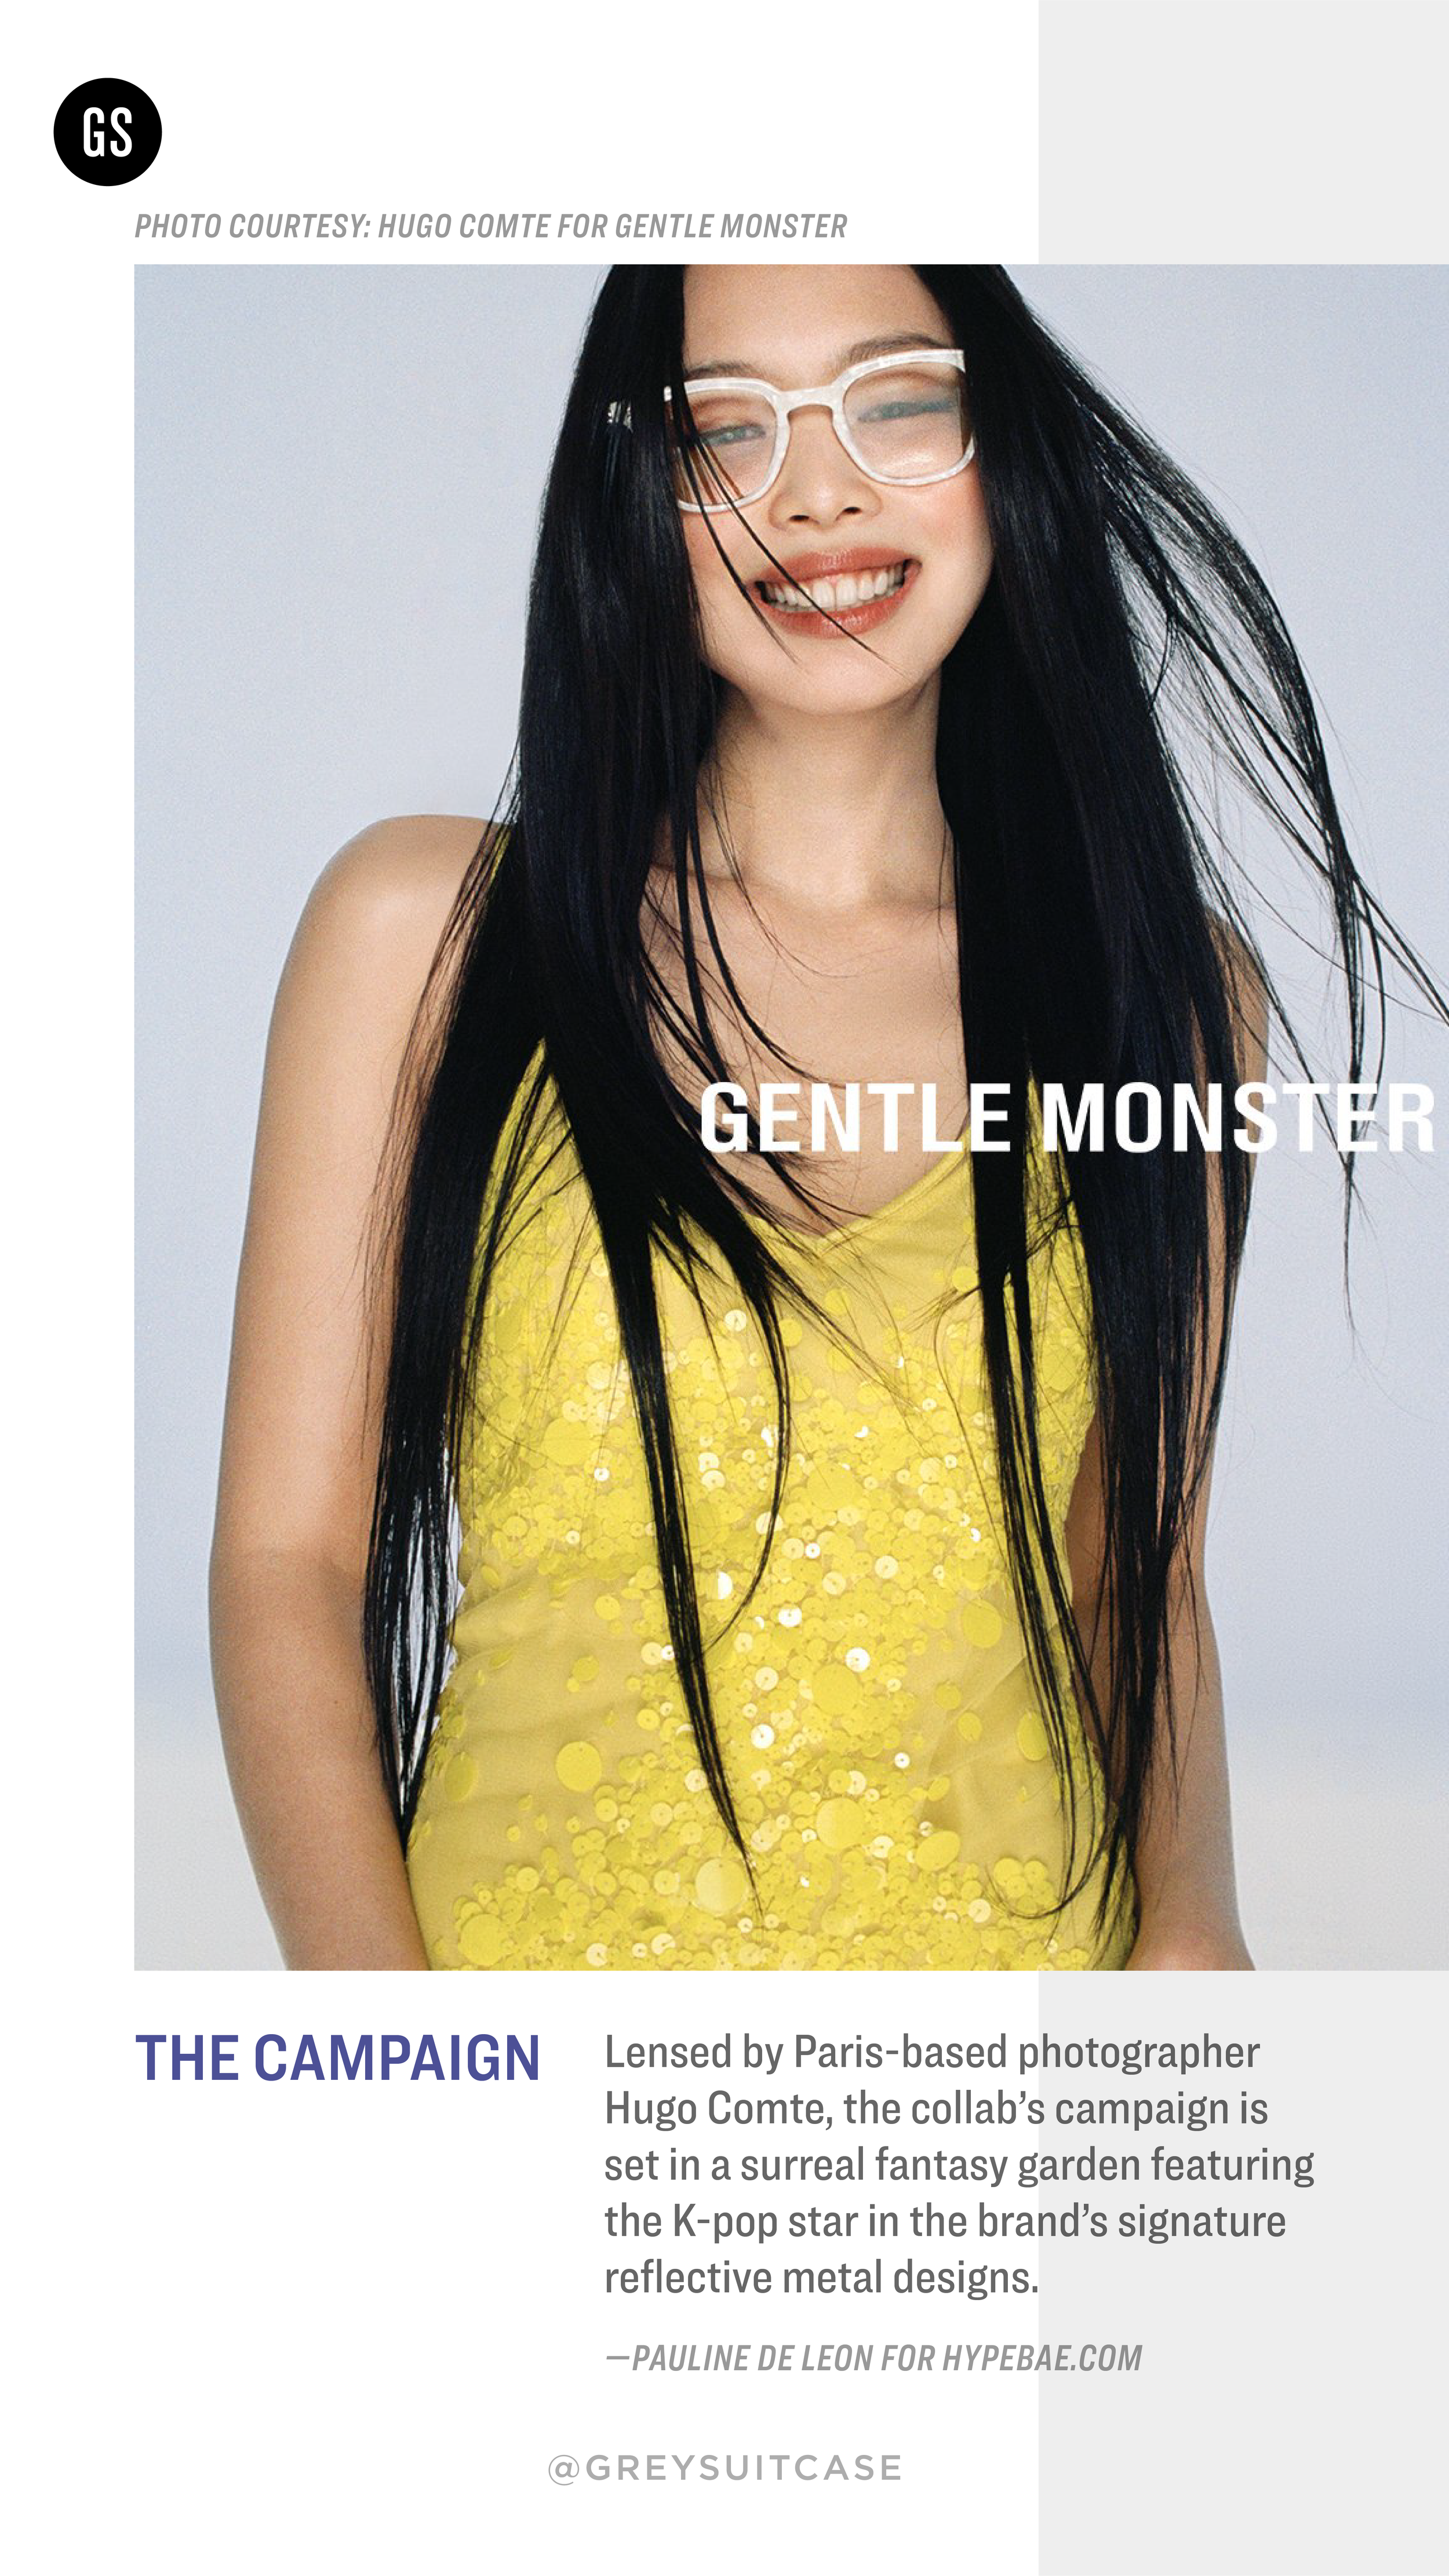 Jentle Garden: Gentle Monster x Blackpink Jennie 